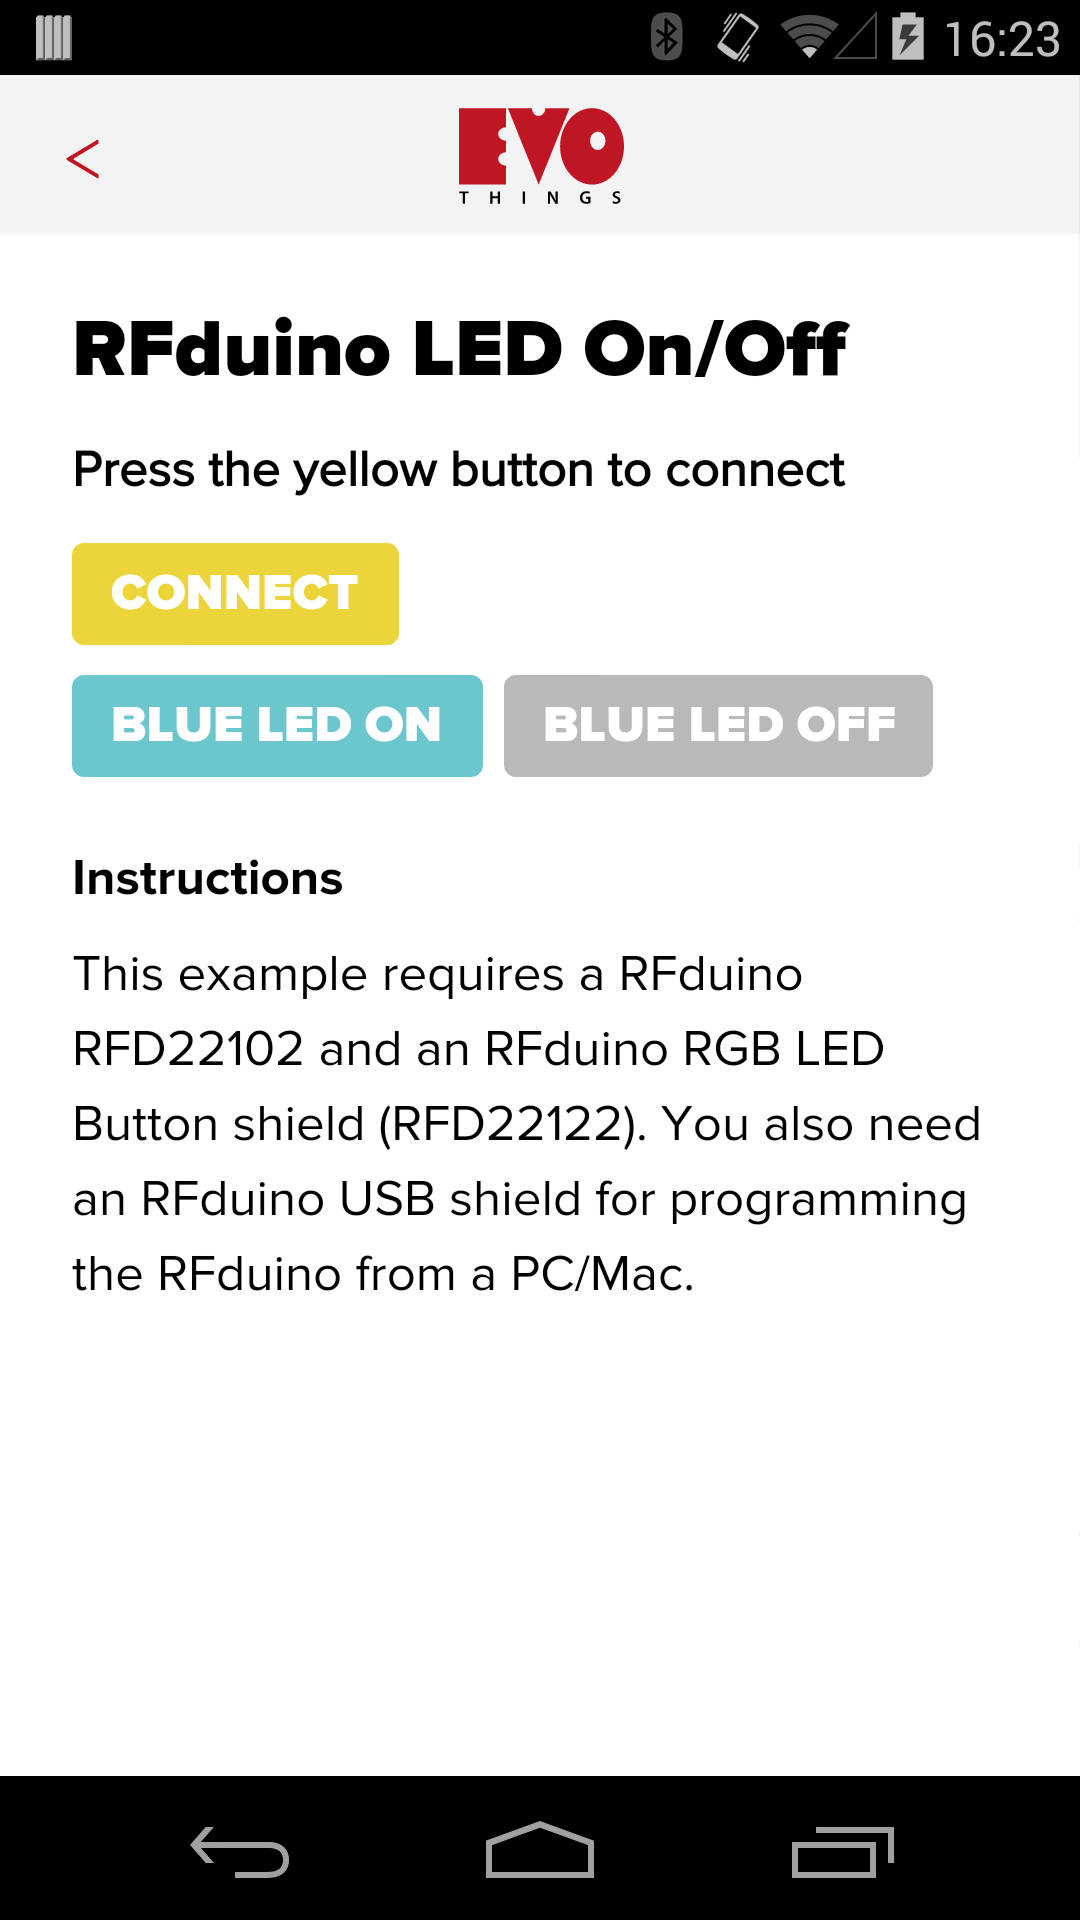 RFduino LED On/Off